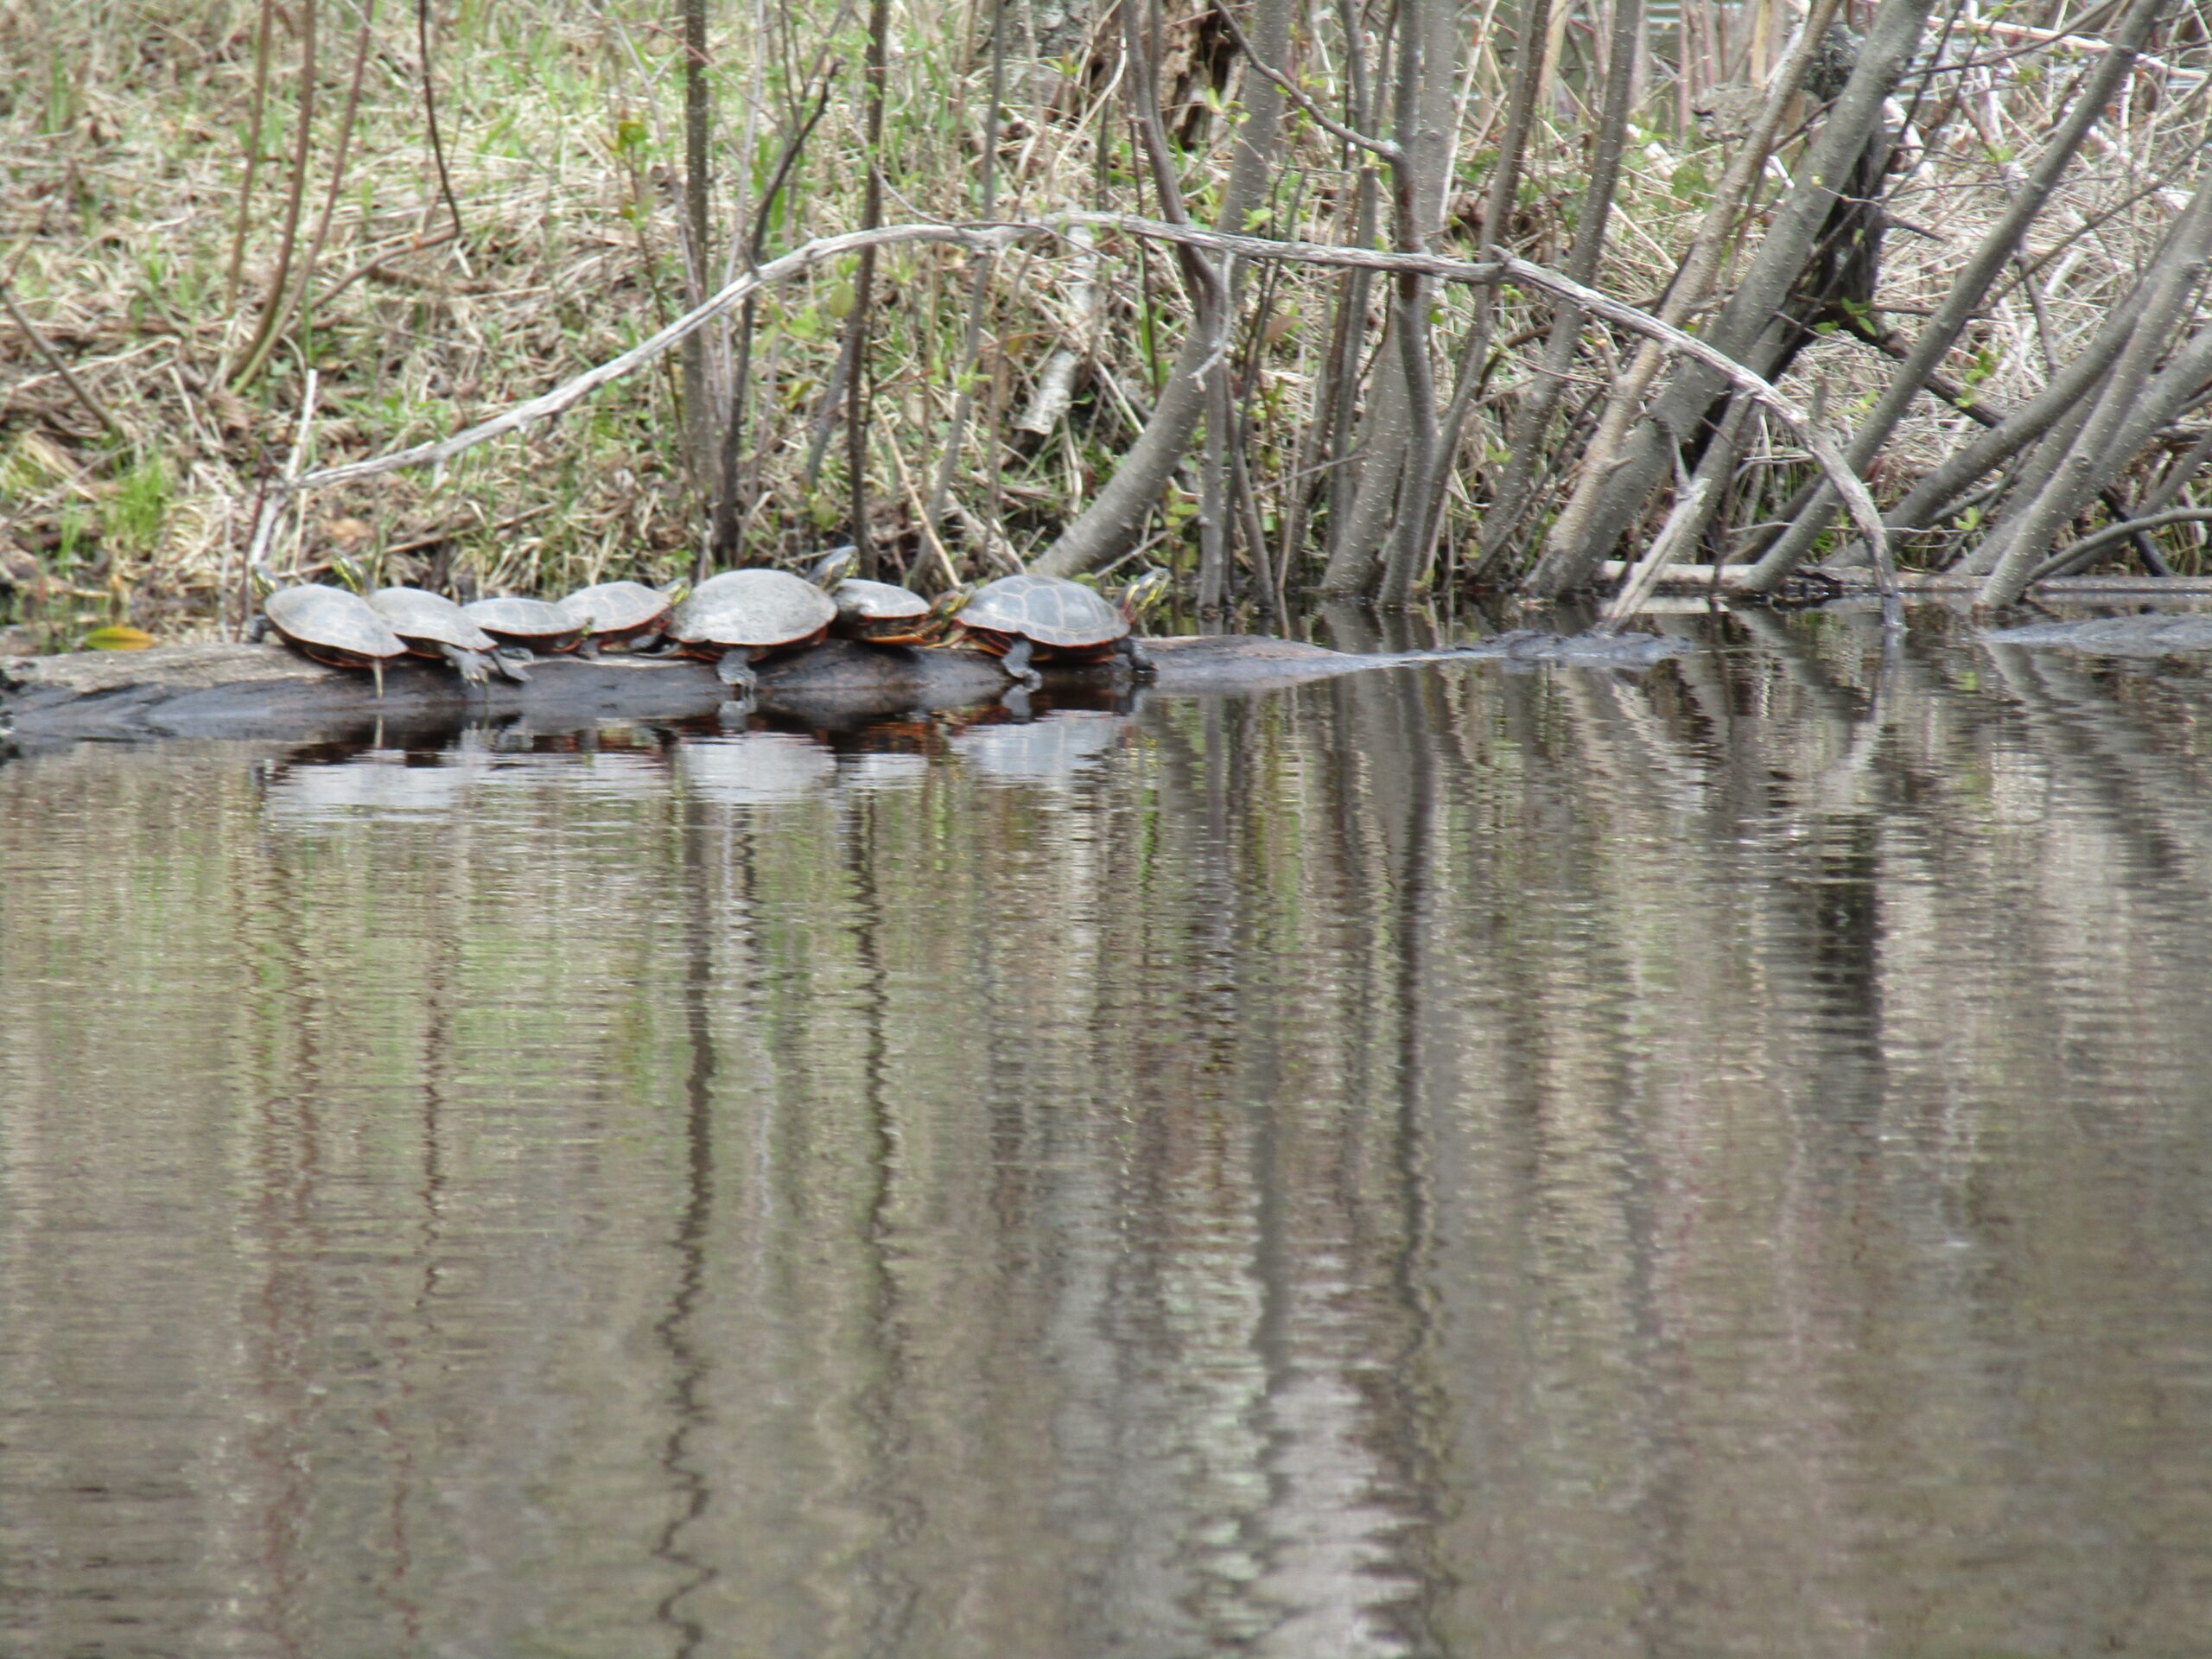 Painted turtles sun themselves on a log at Jordan Pond